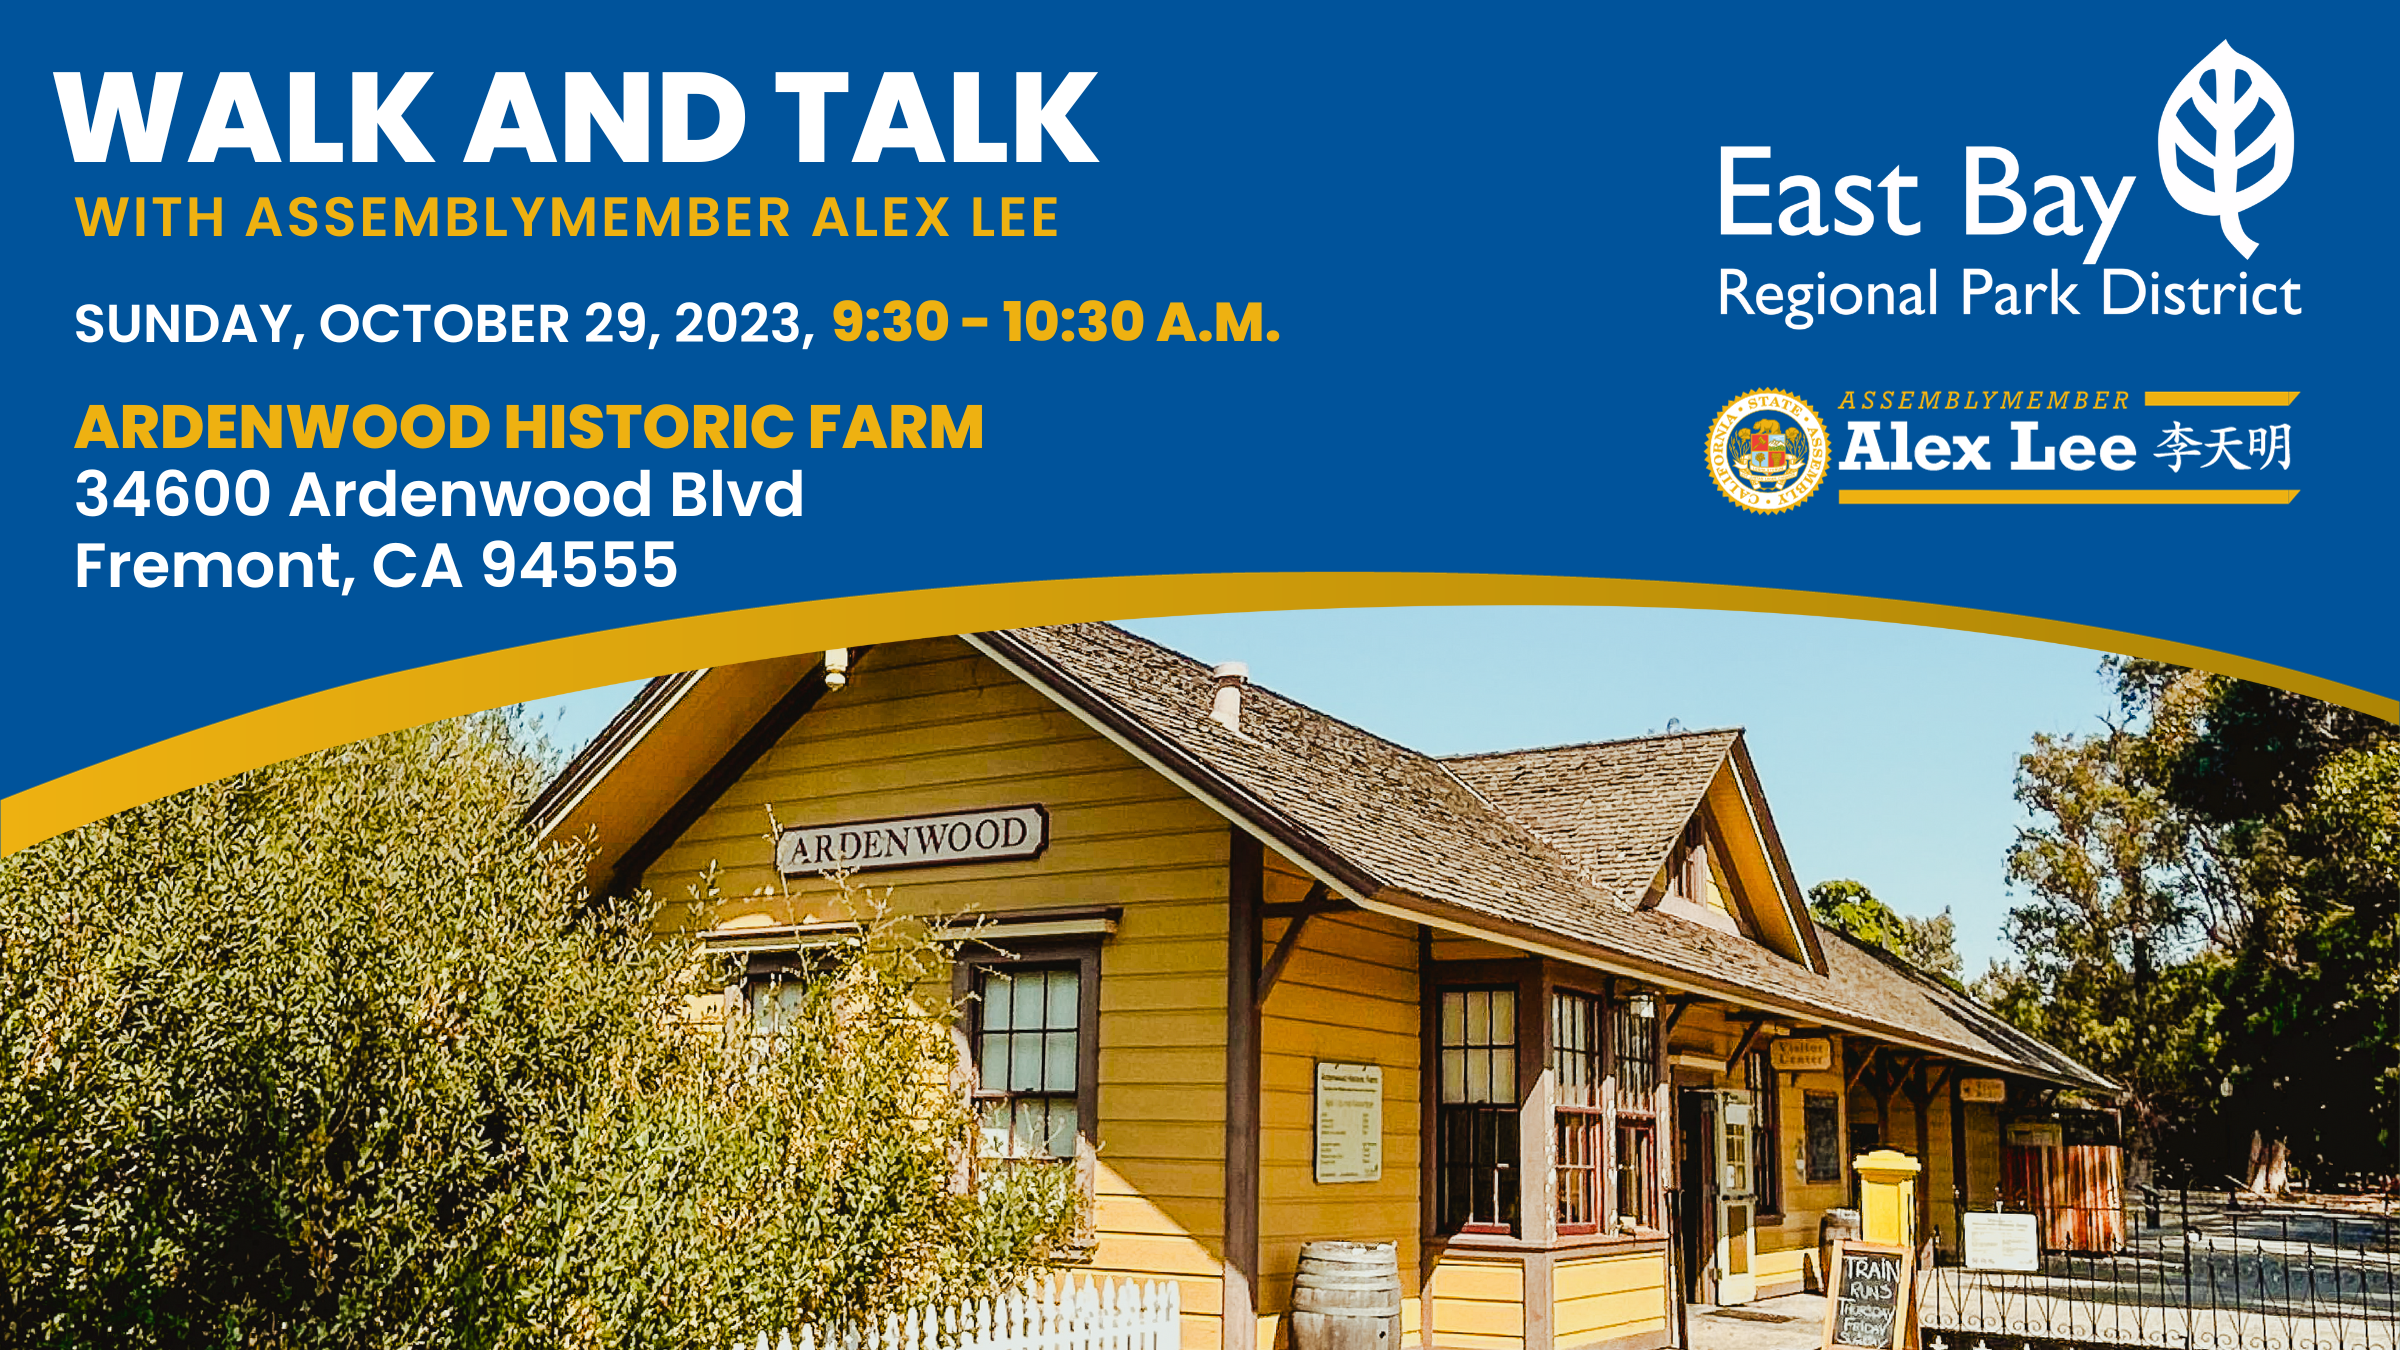 Walk and Talk Event at Ardenwood Historic Farm - Oct 29